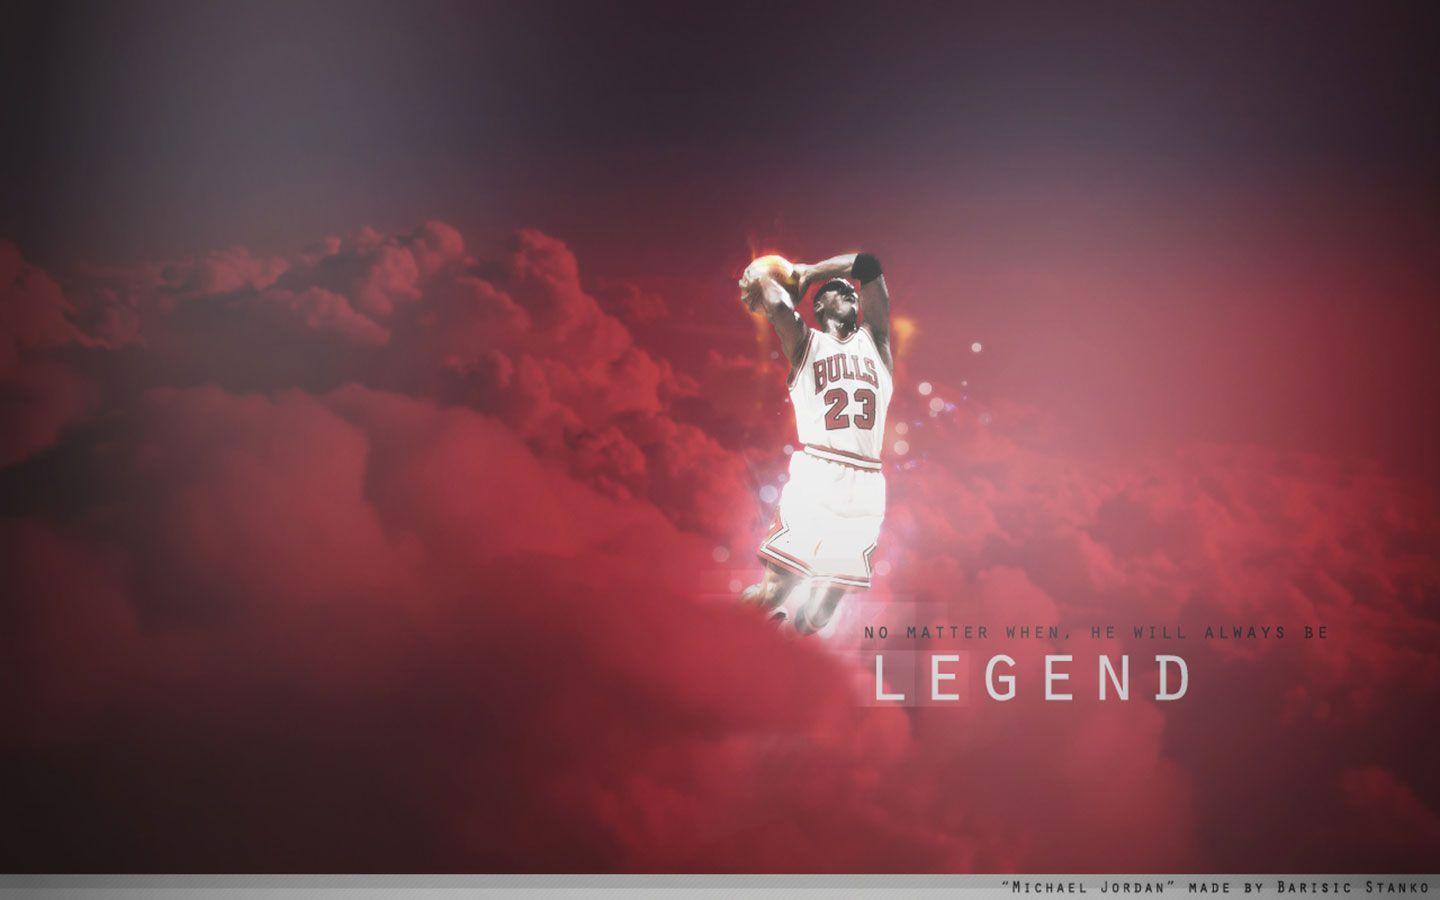 Michael Jordan Wallpaper For Mac Sh. Awesomeness